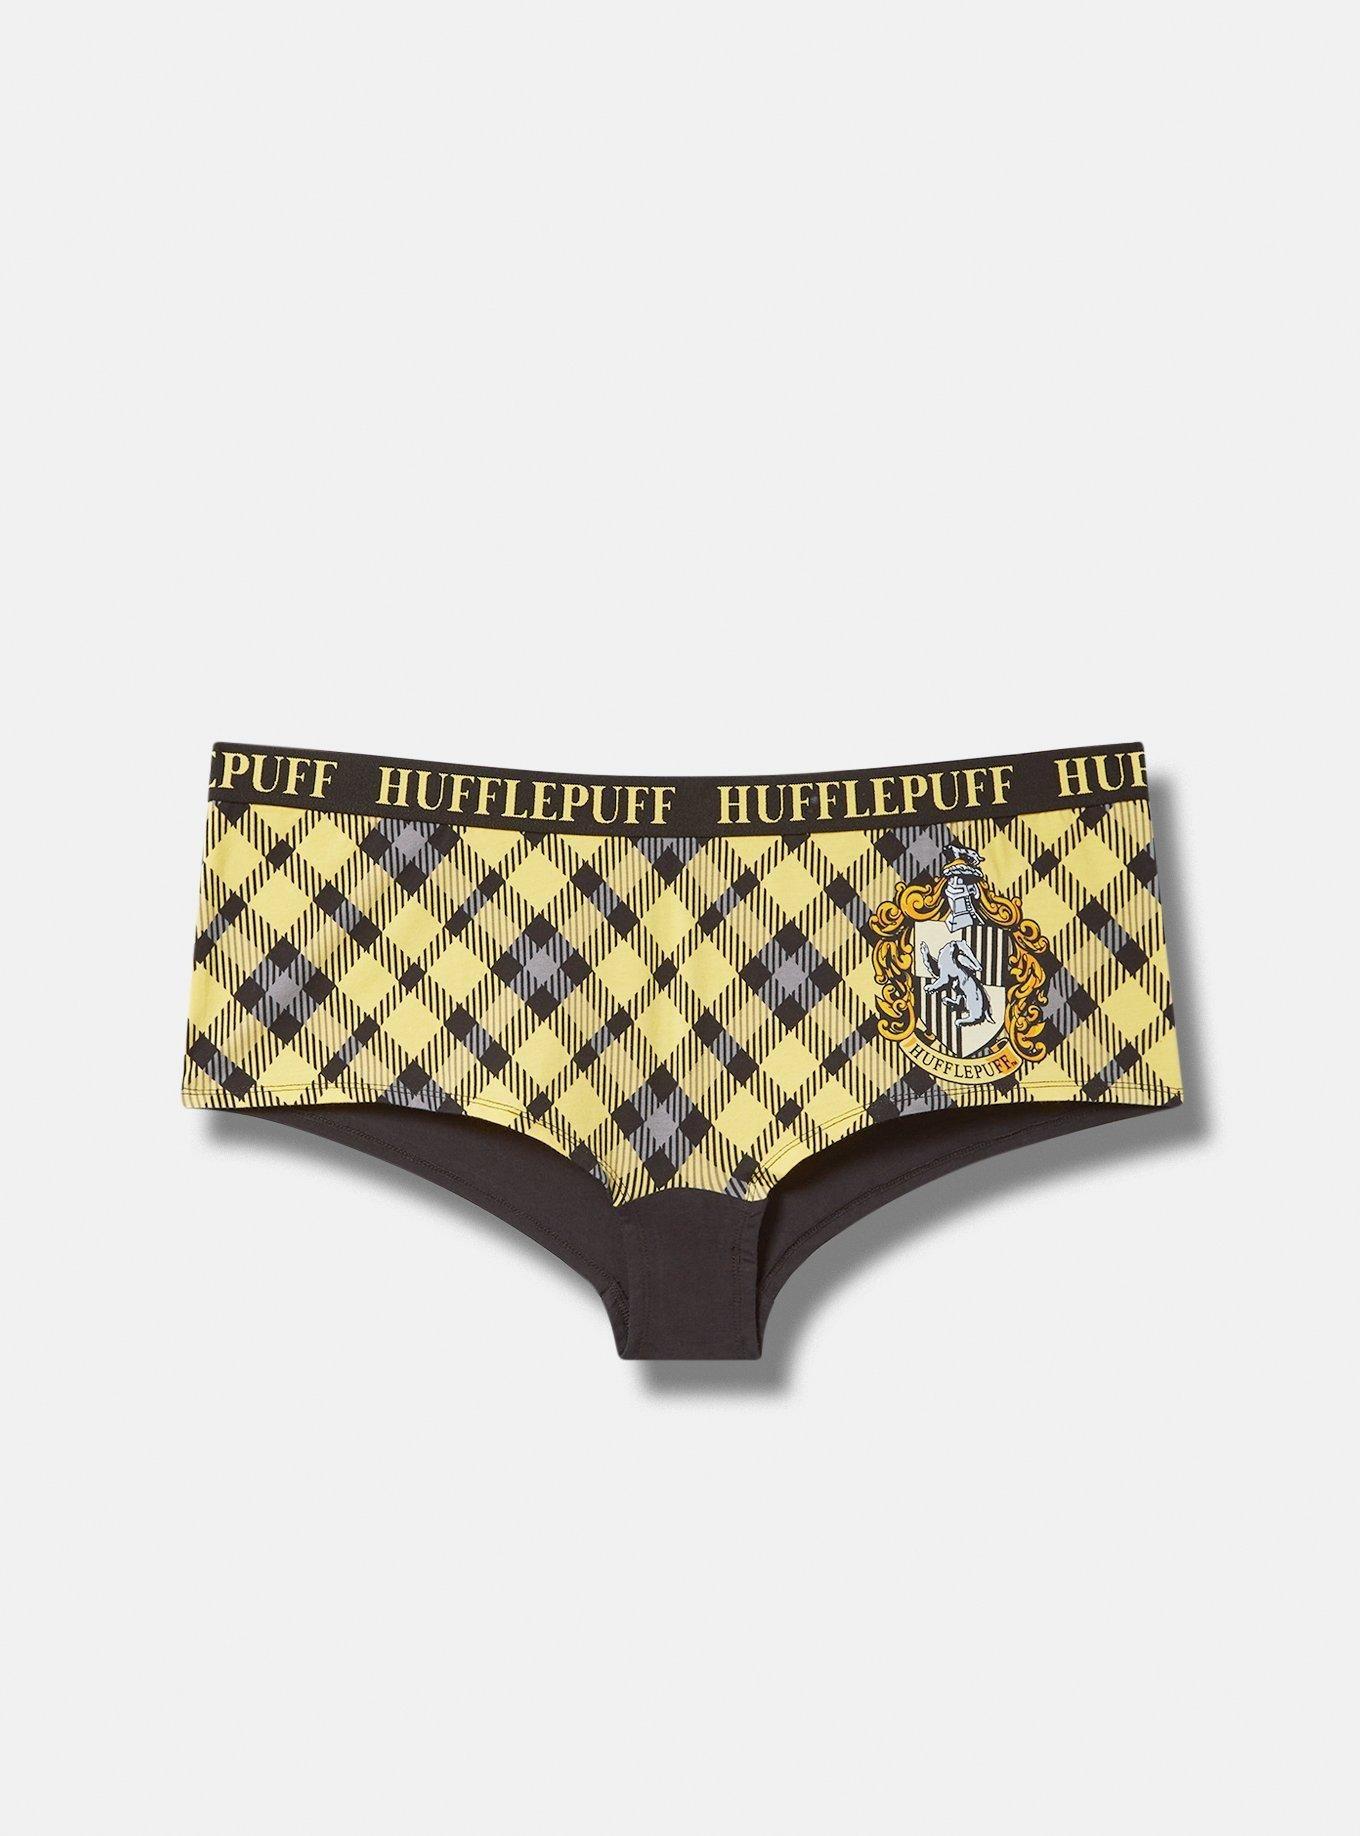 Torrid Hipster Panties Underwear Harry Potter Dobby Is Free Plus Size 5 28